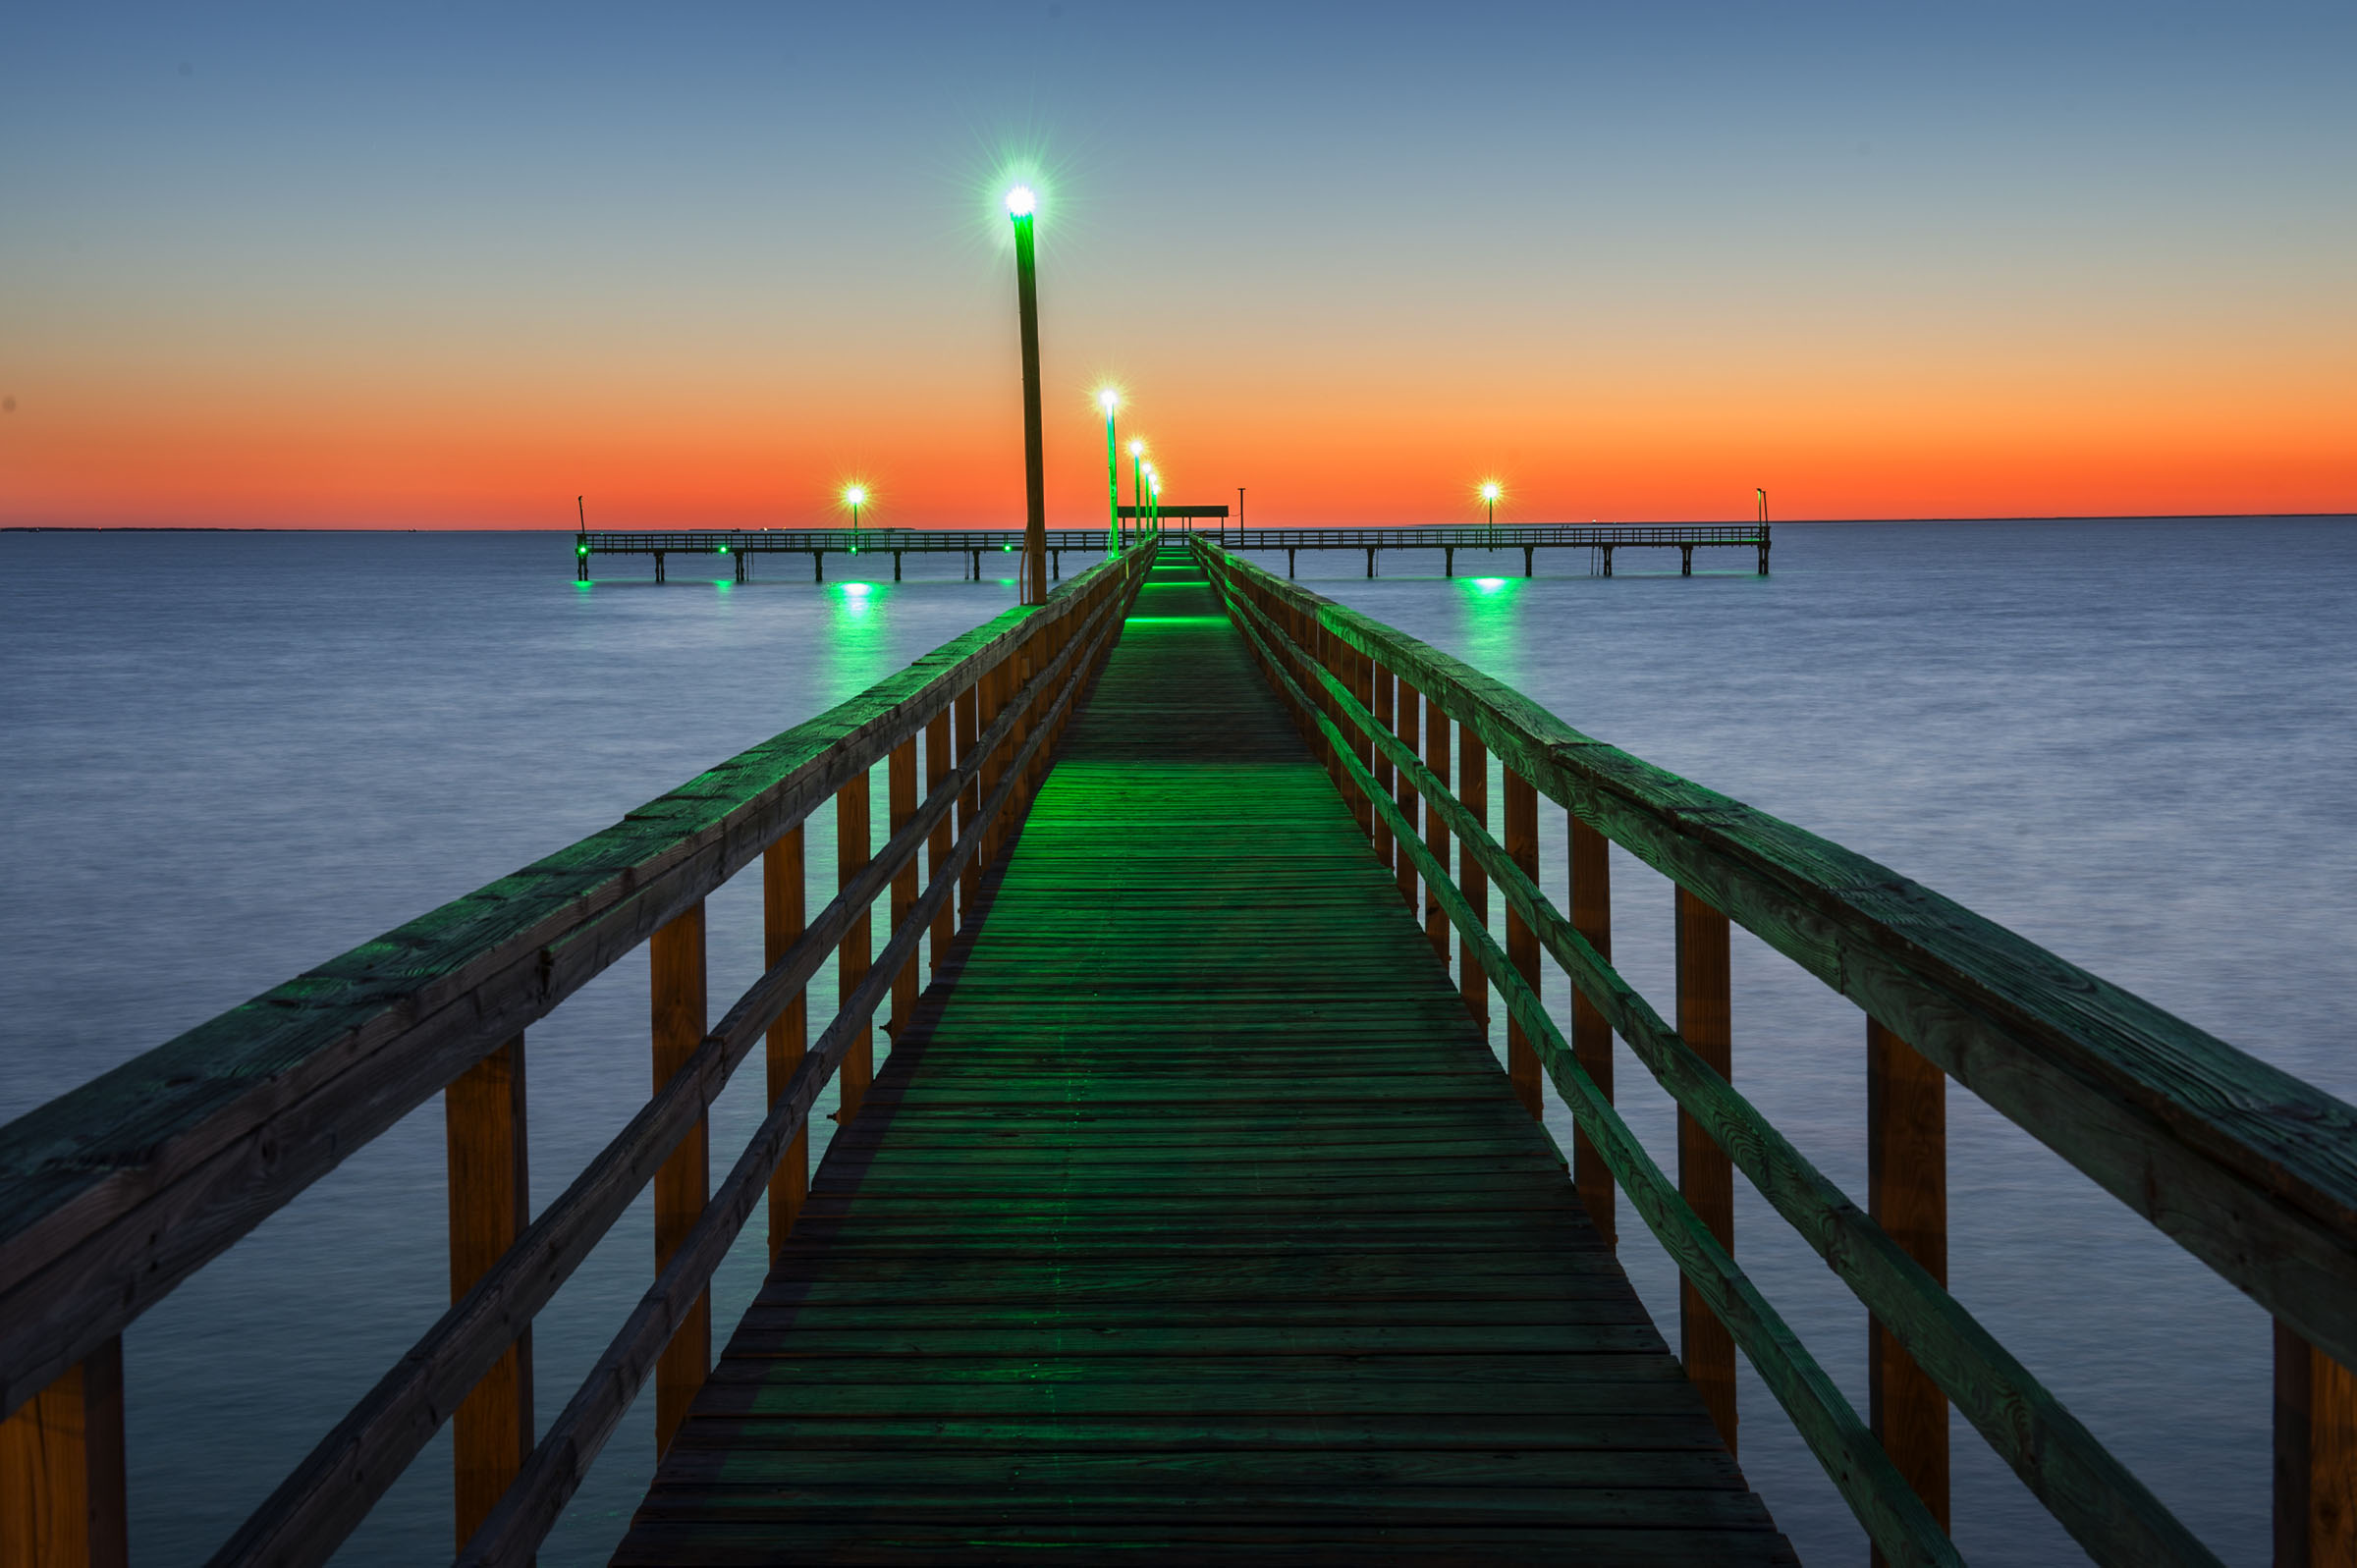 Green lights illuminate a pier leading to an orange sunset